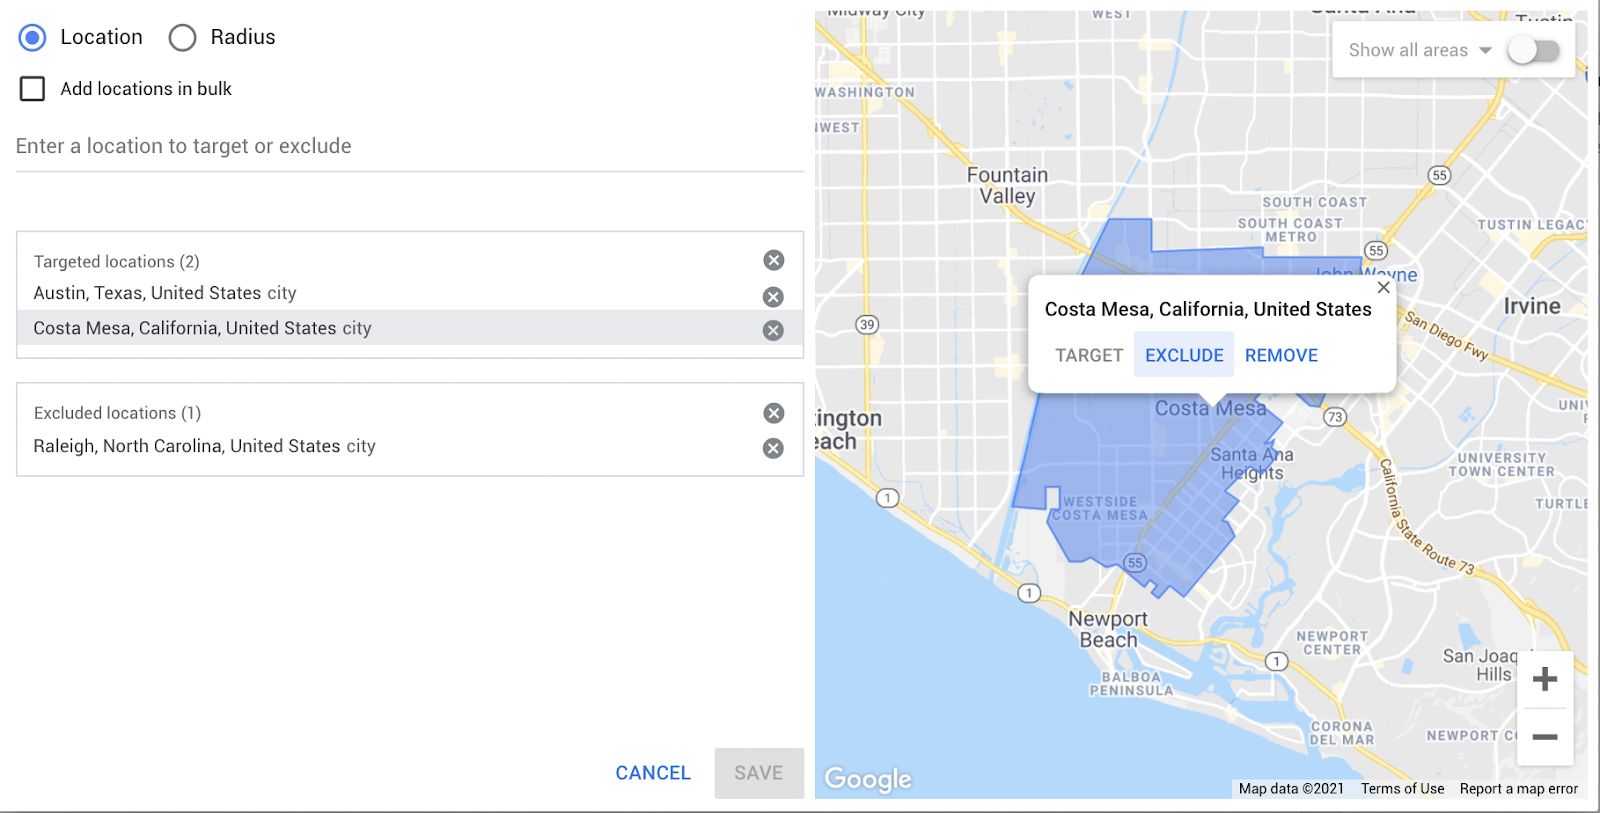 google display ads ad locations visual map